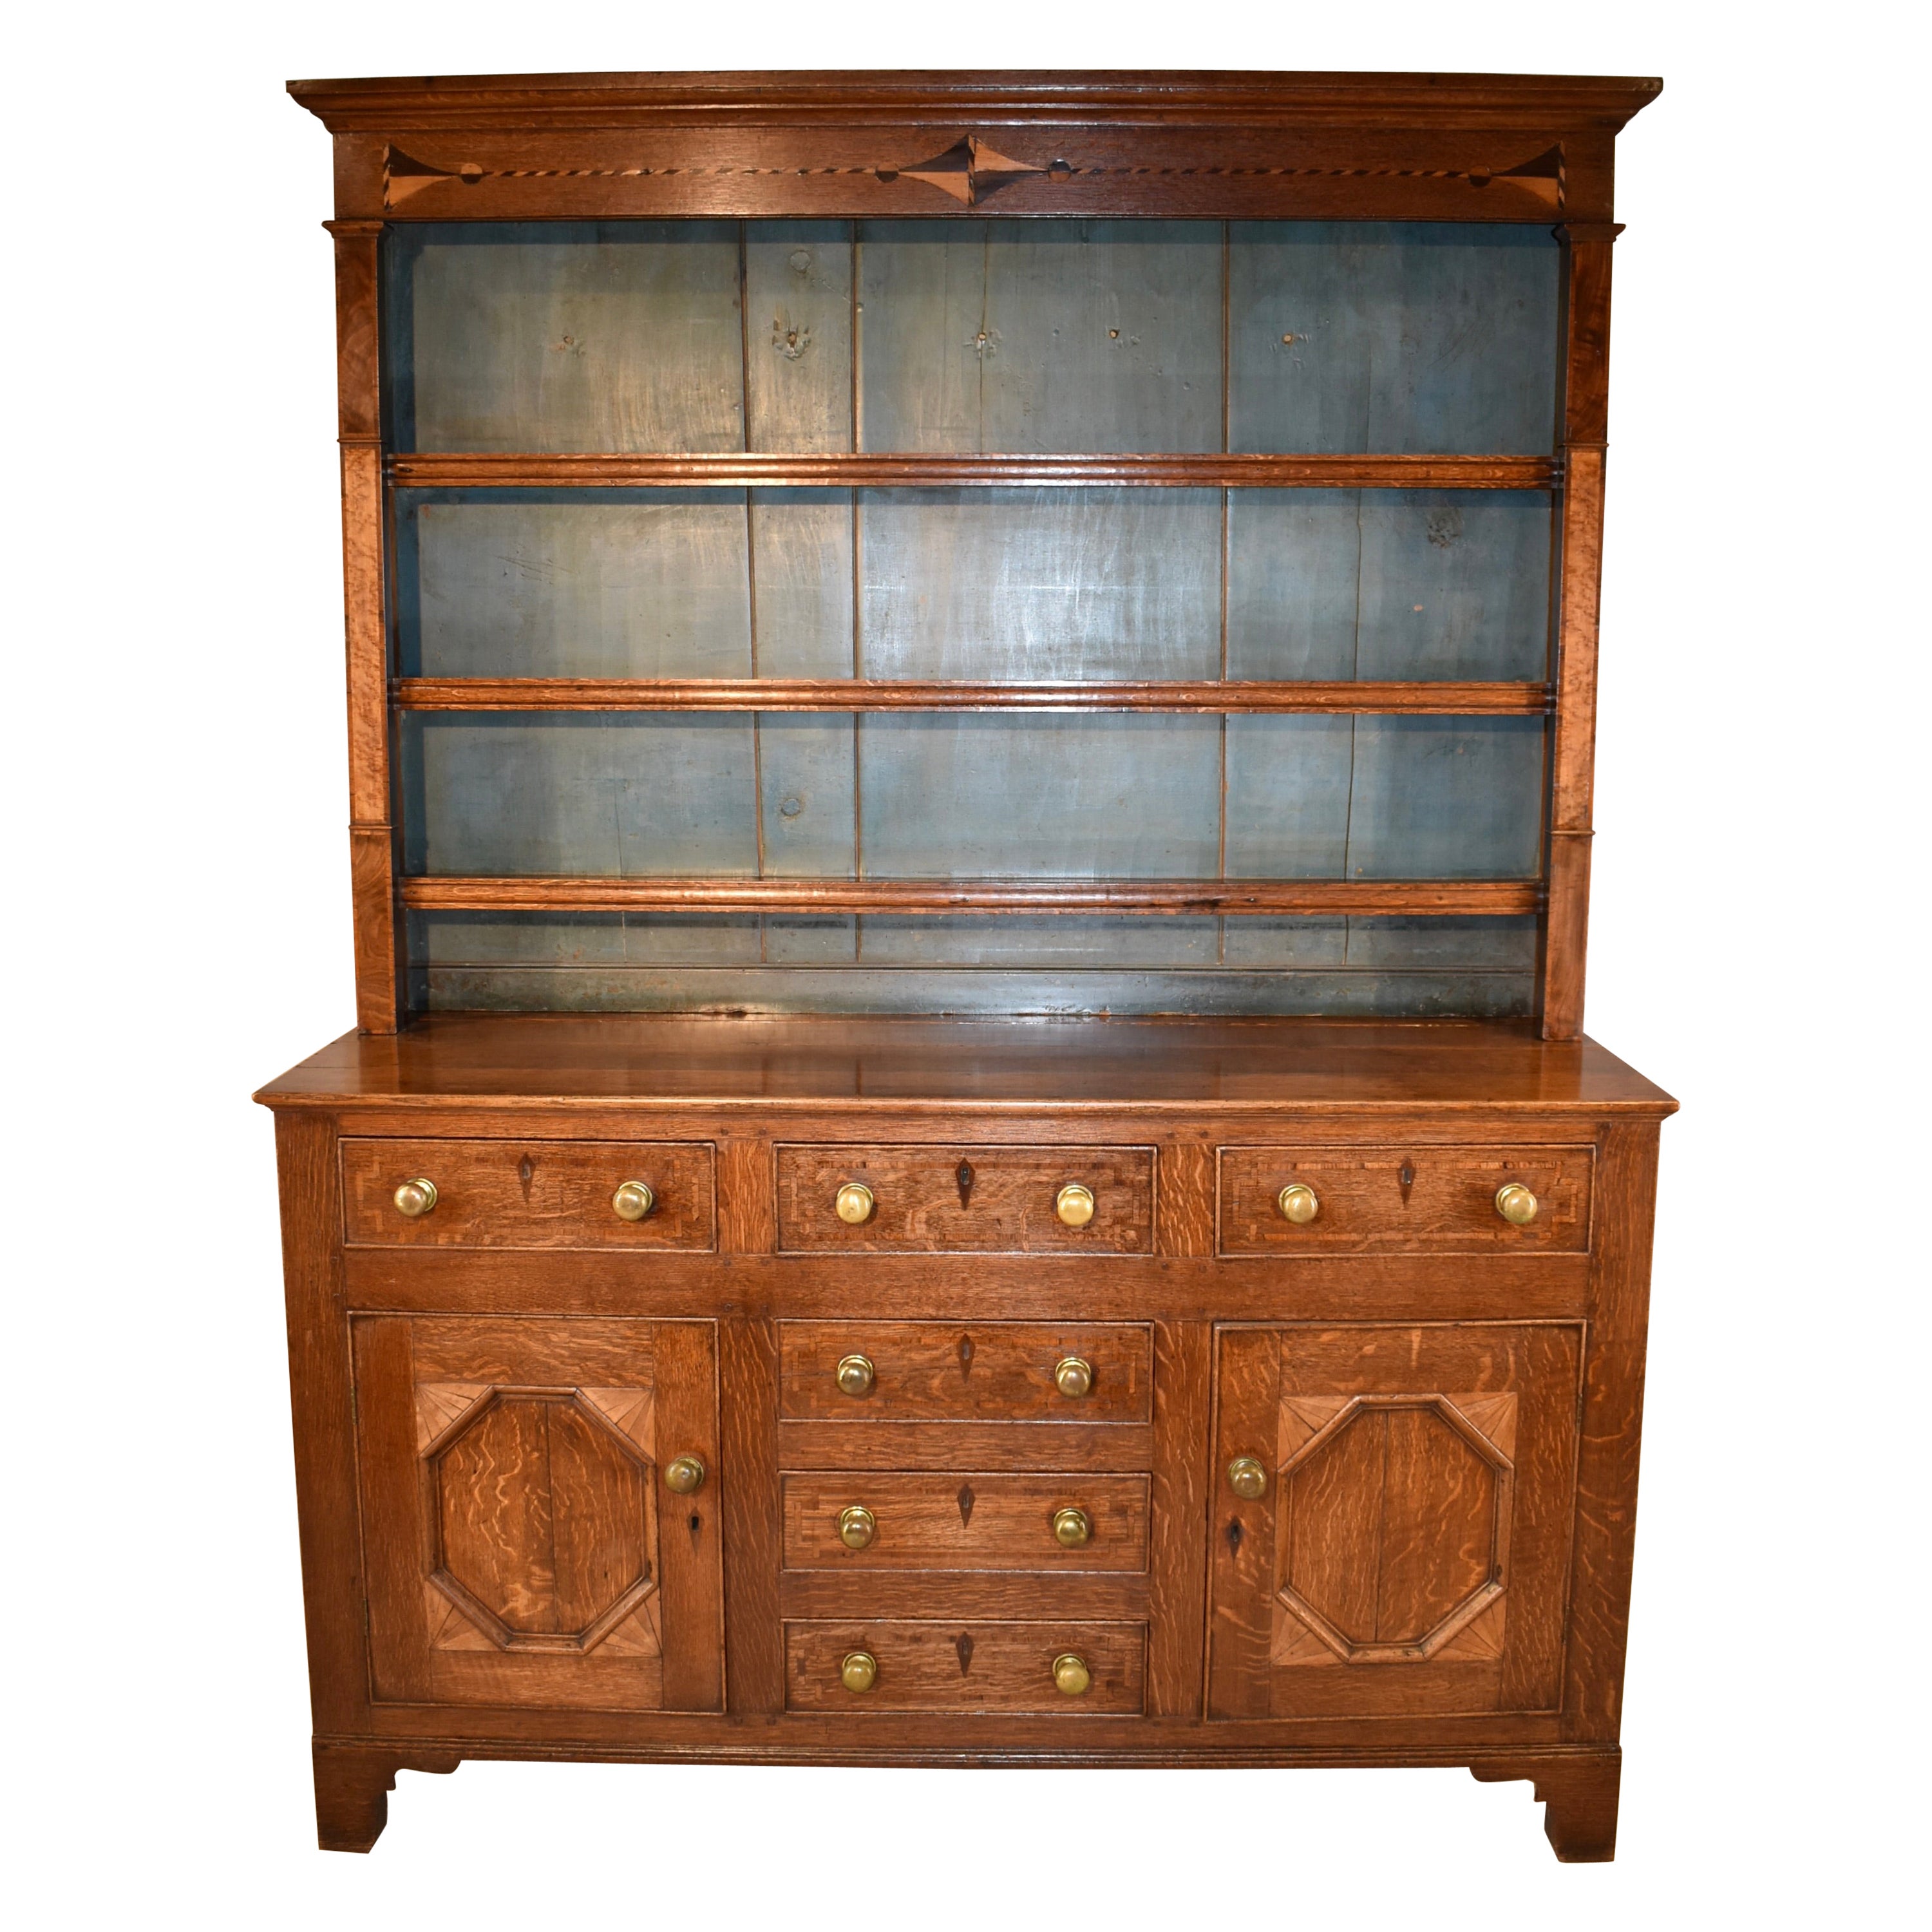 Early 19th Century Welsh Dresser